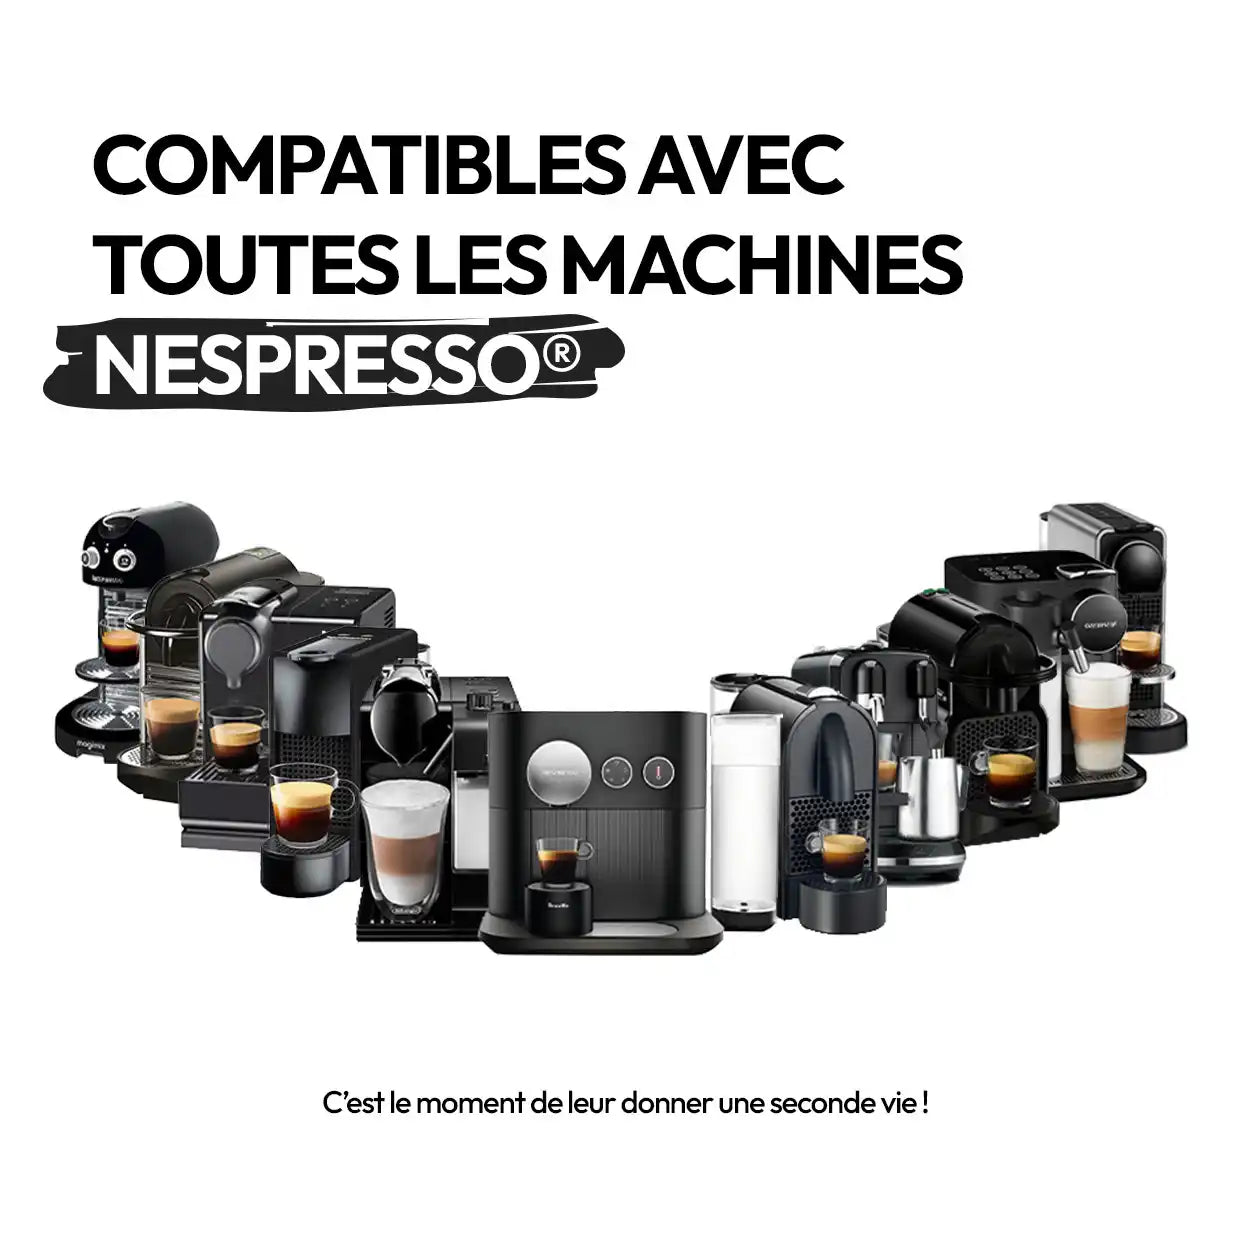 Box - Reusable coffee capsules